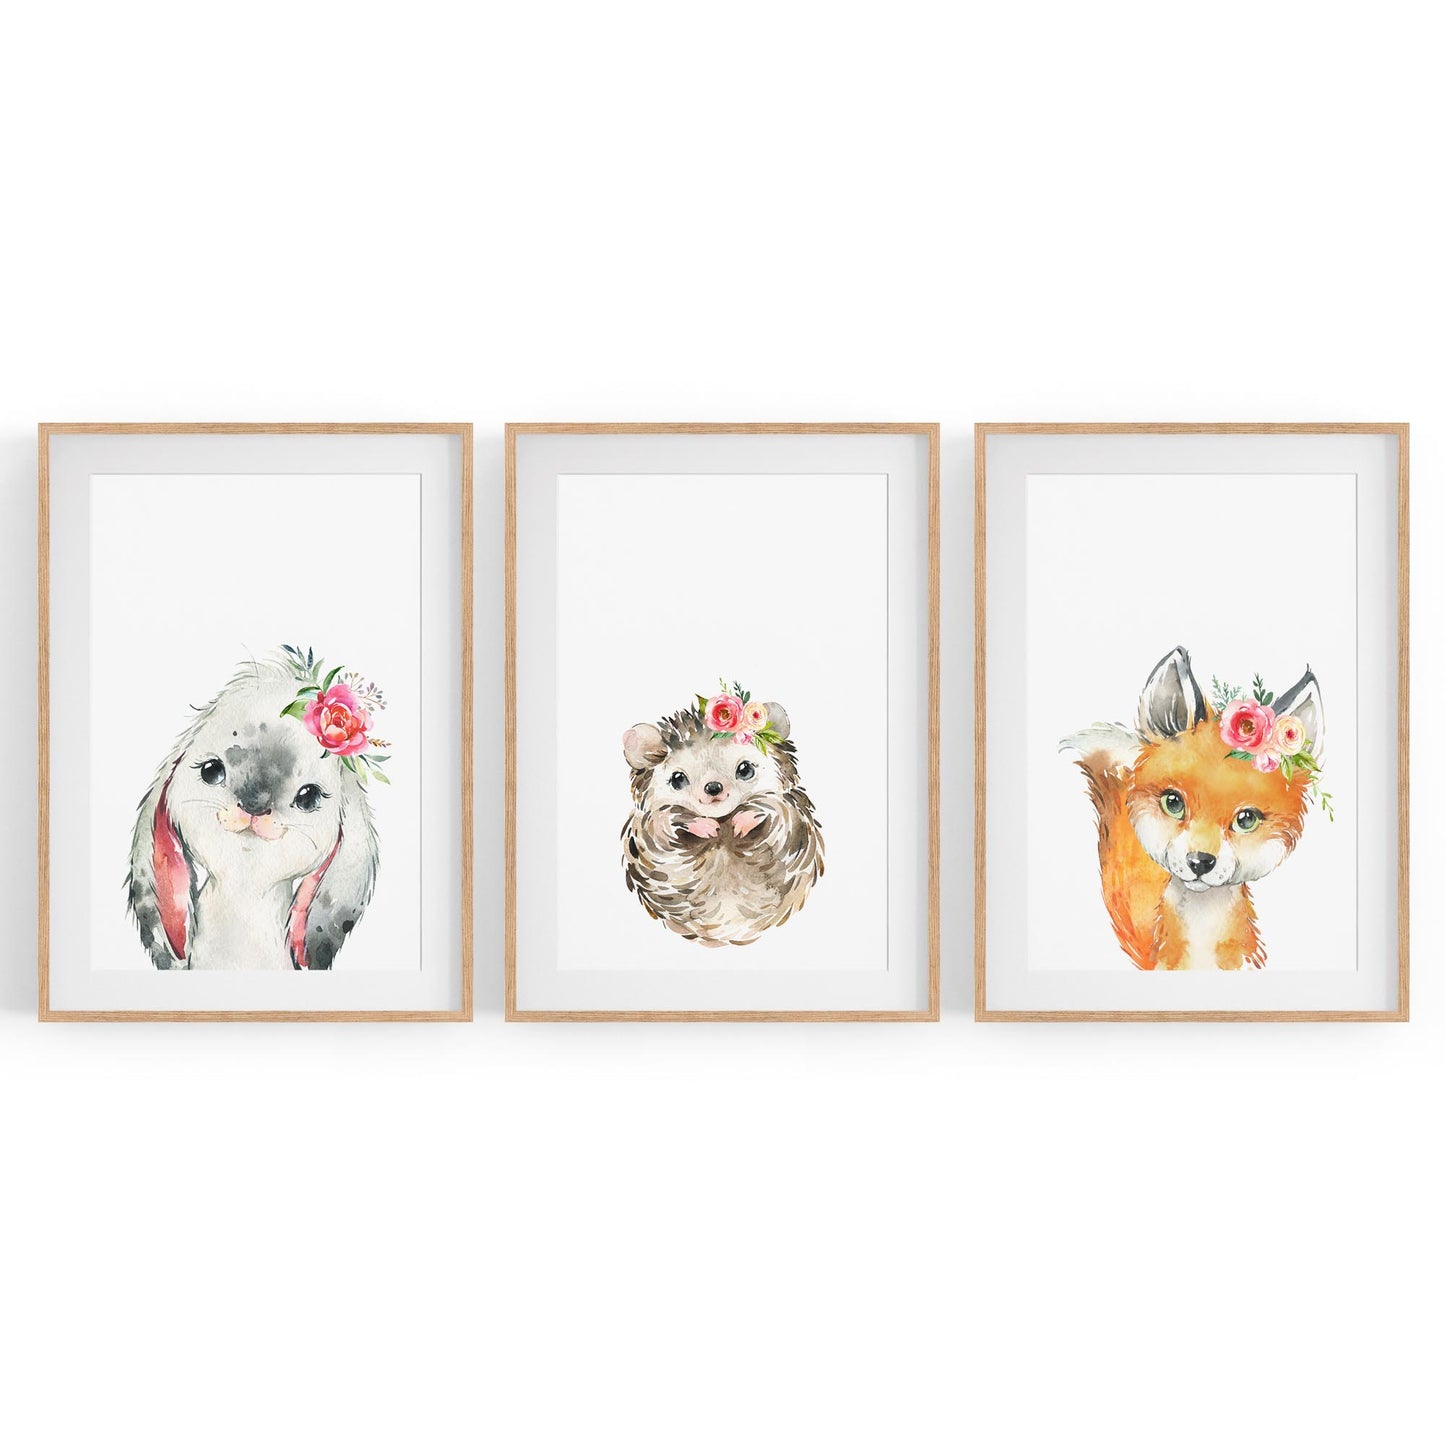 Set of Cute Baby Woodland Animals Nursery Wall Art #1 - The Affordable Art Company